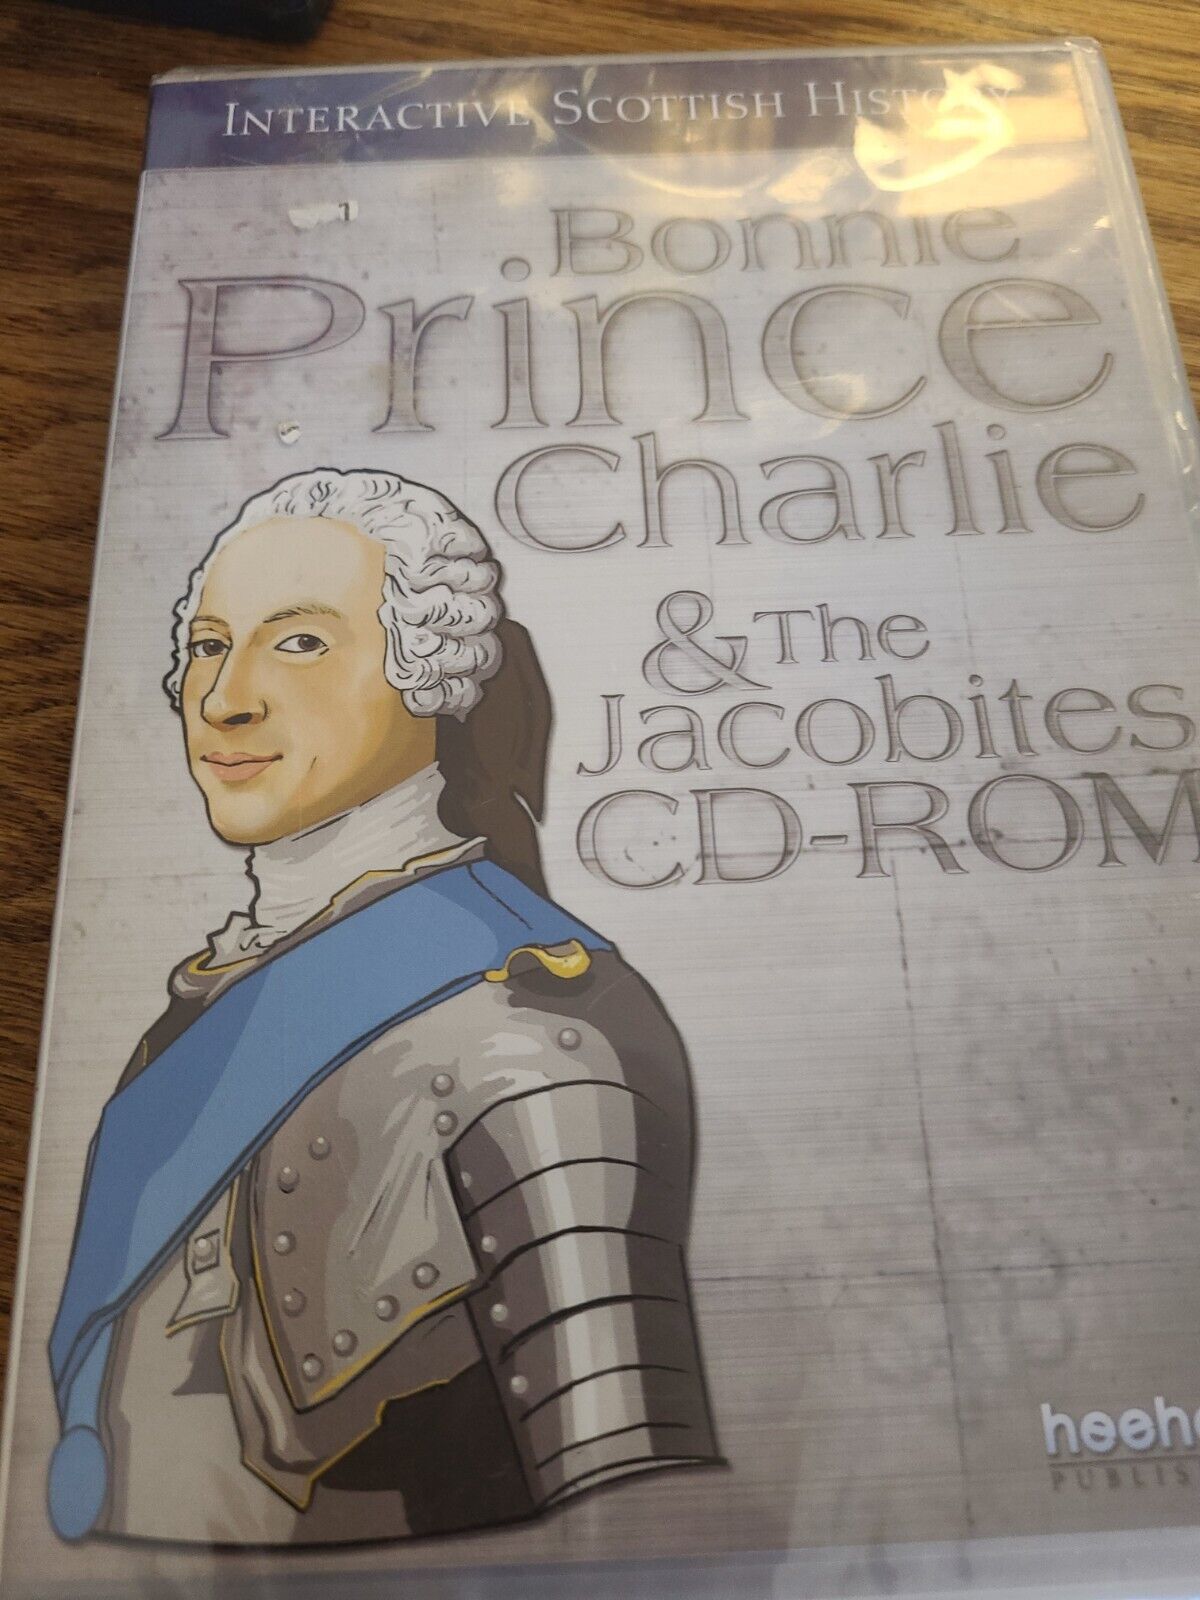 bonnie prince charlie & the jacobites cd-rom Scottish History Brand New